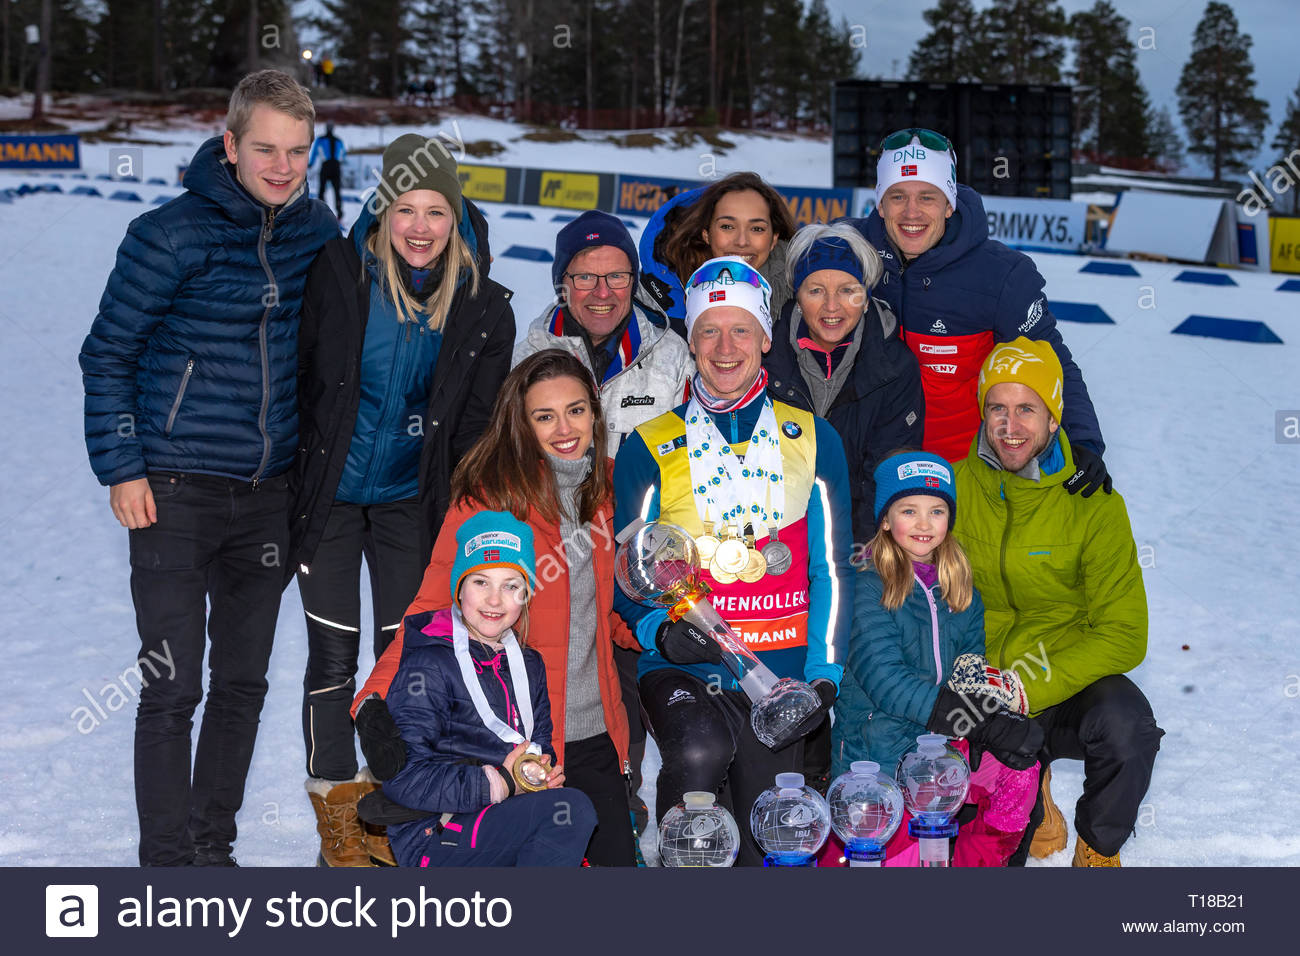 bmw-ibu-world-cup-biathlon-24-march-2019-johannes-thingnes-boe-of-norway-celebrating-with-his-family-at-the-bmw-ibu-world-cup-biathlon-in-holmenkollen-oslo-norway-credit-nigel-waldronalamy-live-news-T18B21.jpg, 218kB